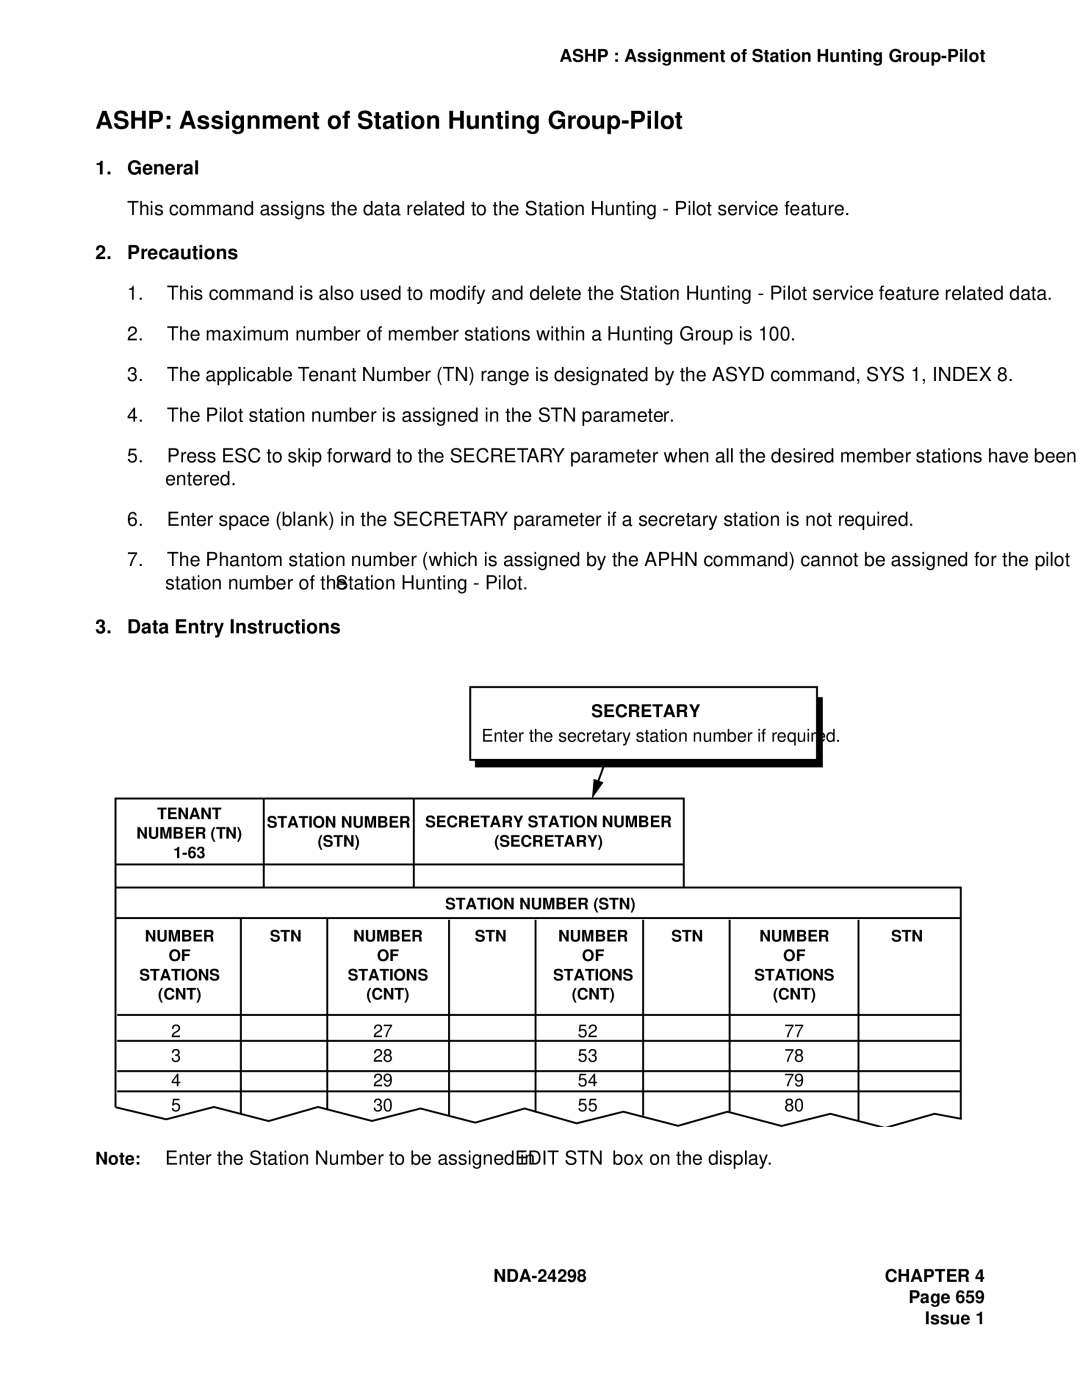 NEC NDA-24298 manual Ashp Assignment of Station Hunting Group-Pilot, Secretary 